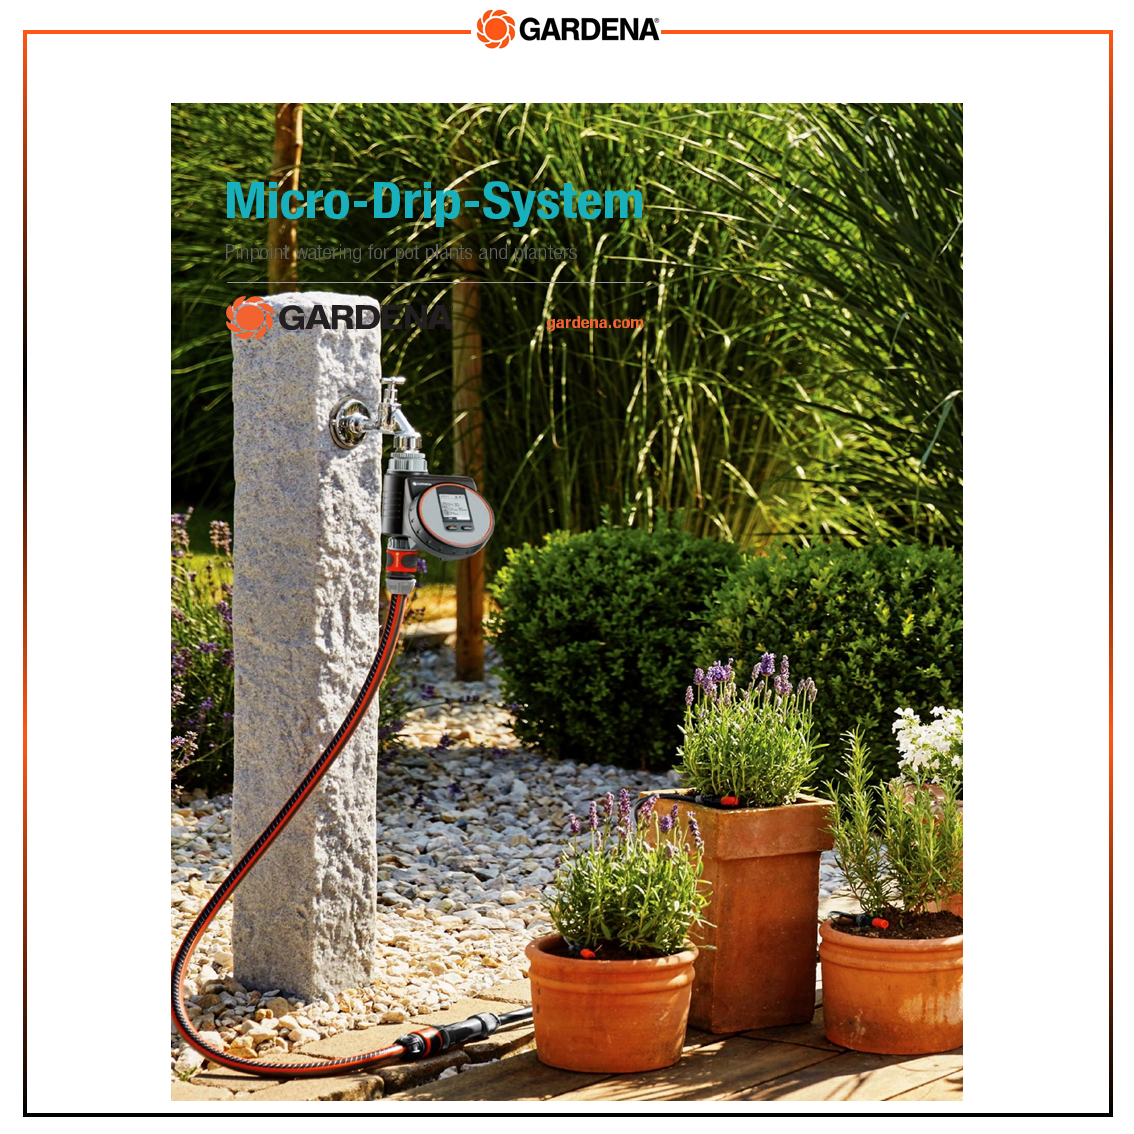 GARDENA - Micro Drip System Catalogue